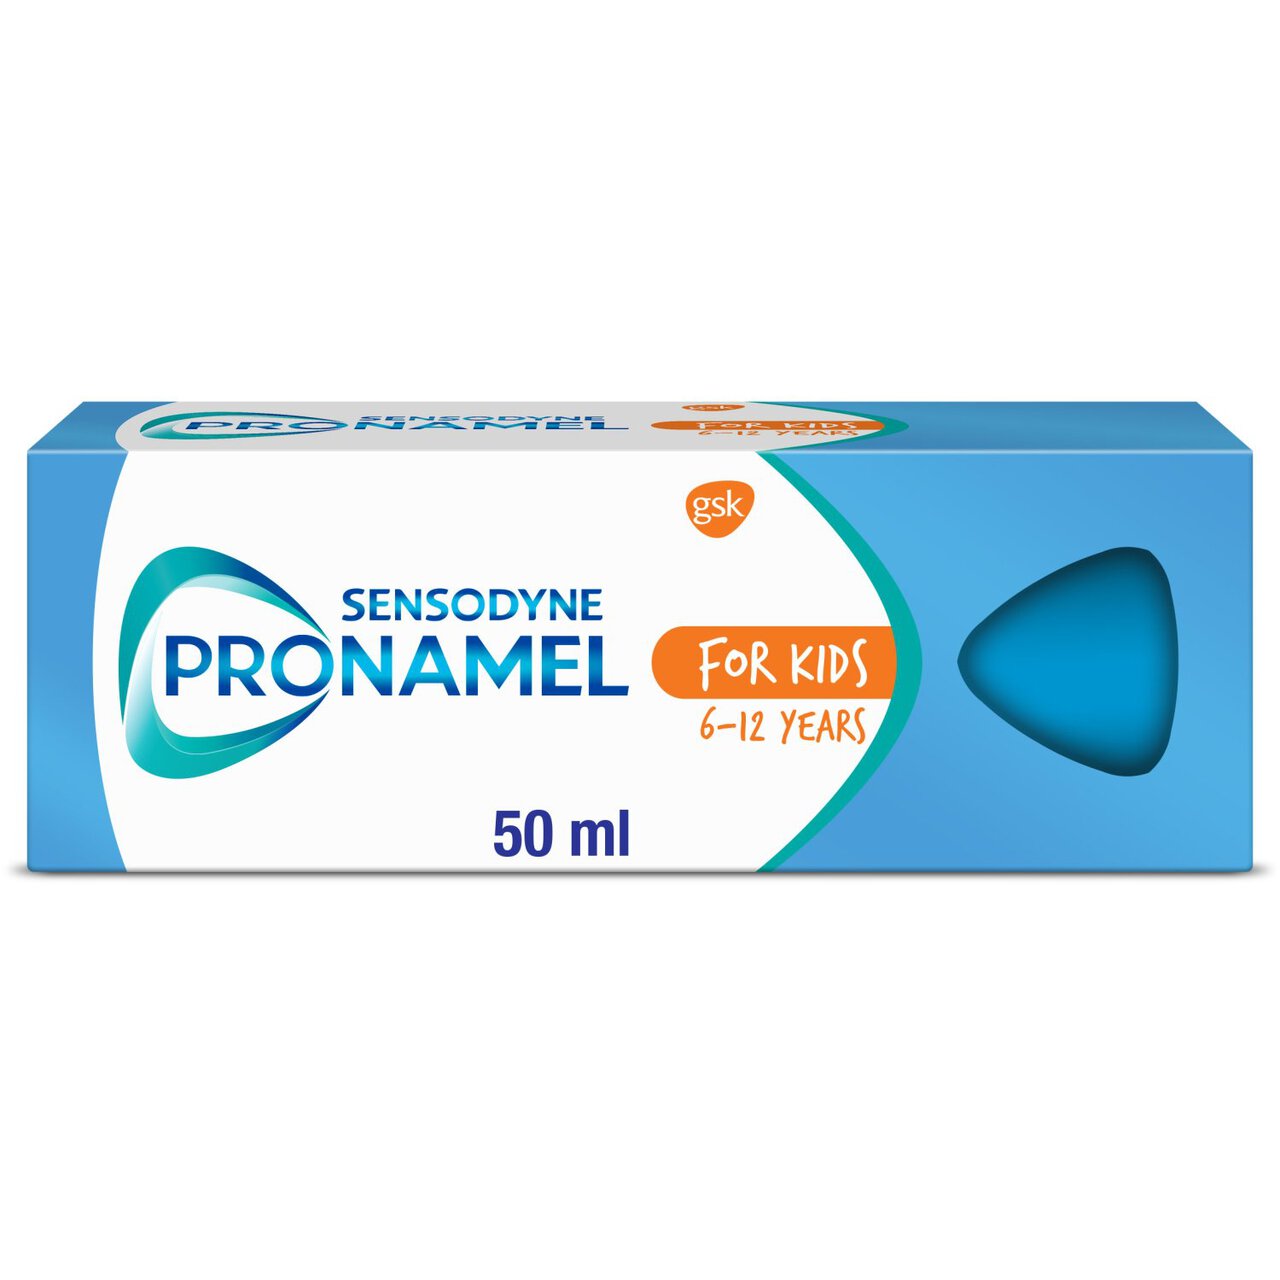 Sensodyne Pronamel Enamel Protection Kids Toothpaste 50ml 50ml